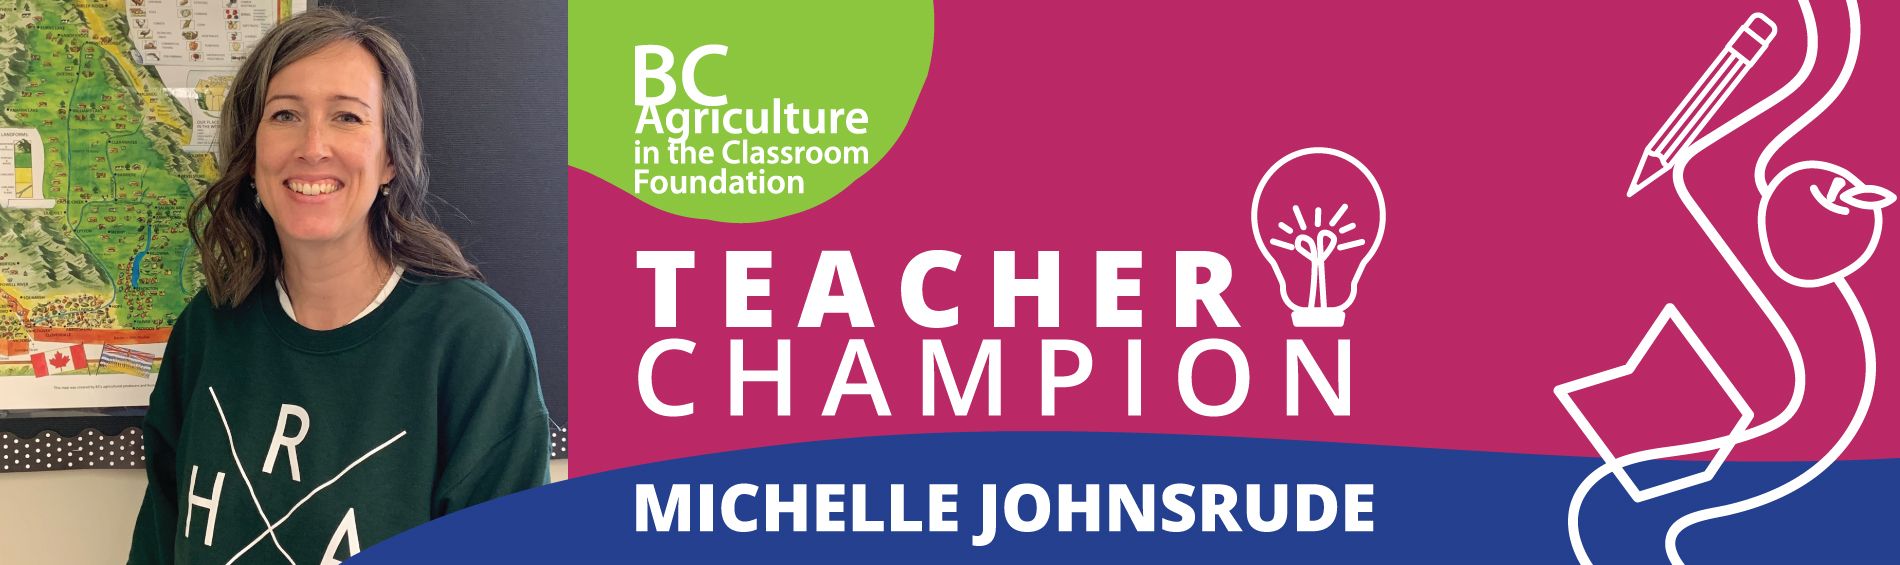 Michelle Johnsrude - Teacher Champion 